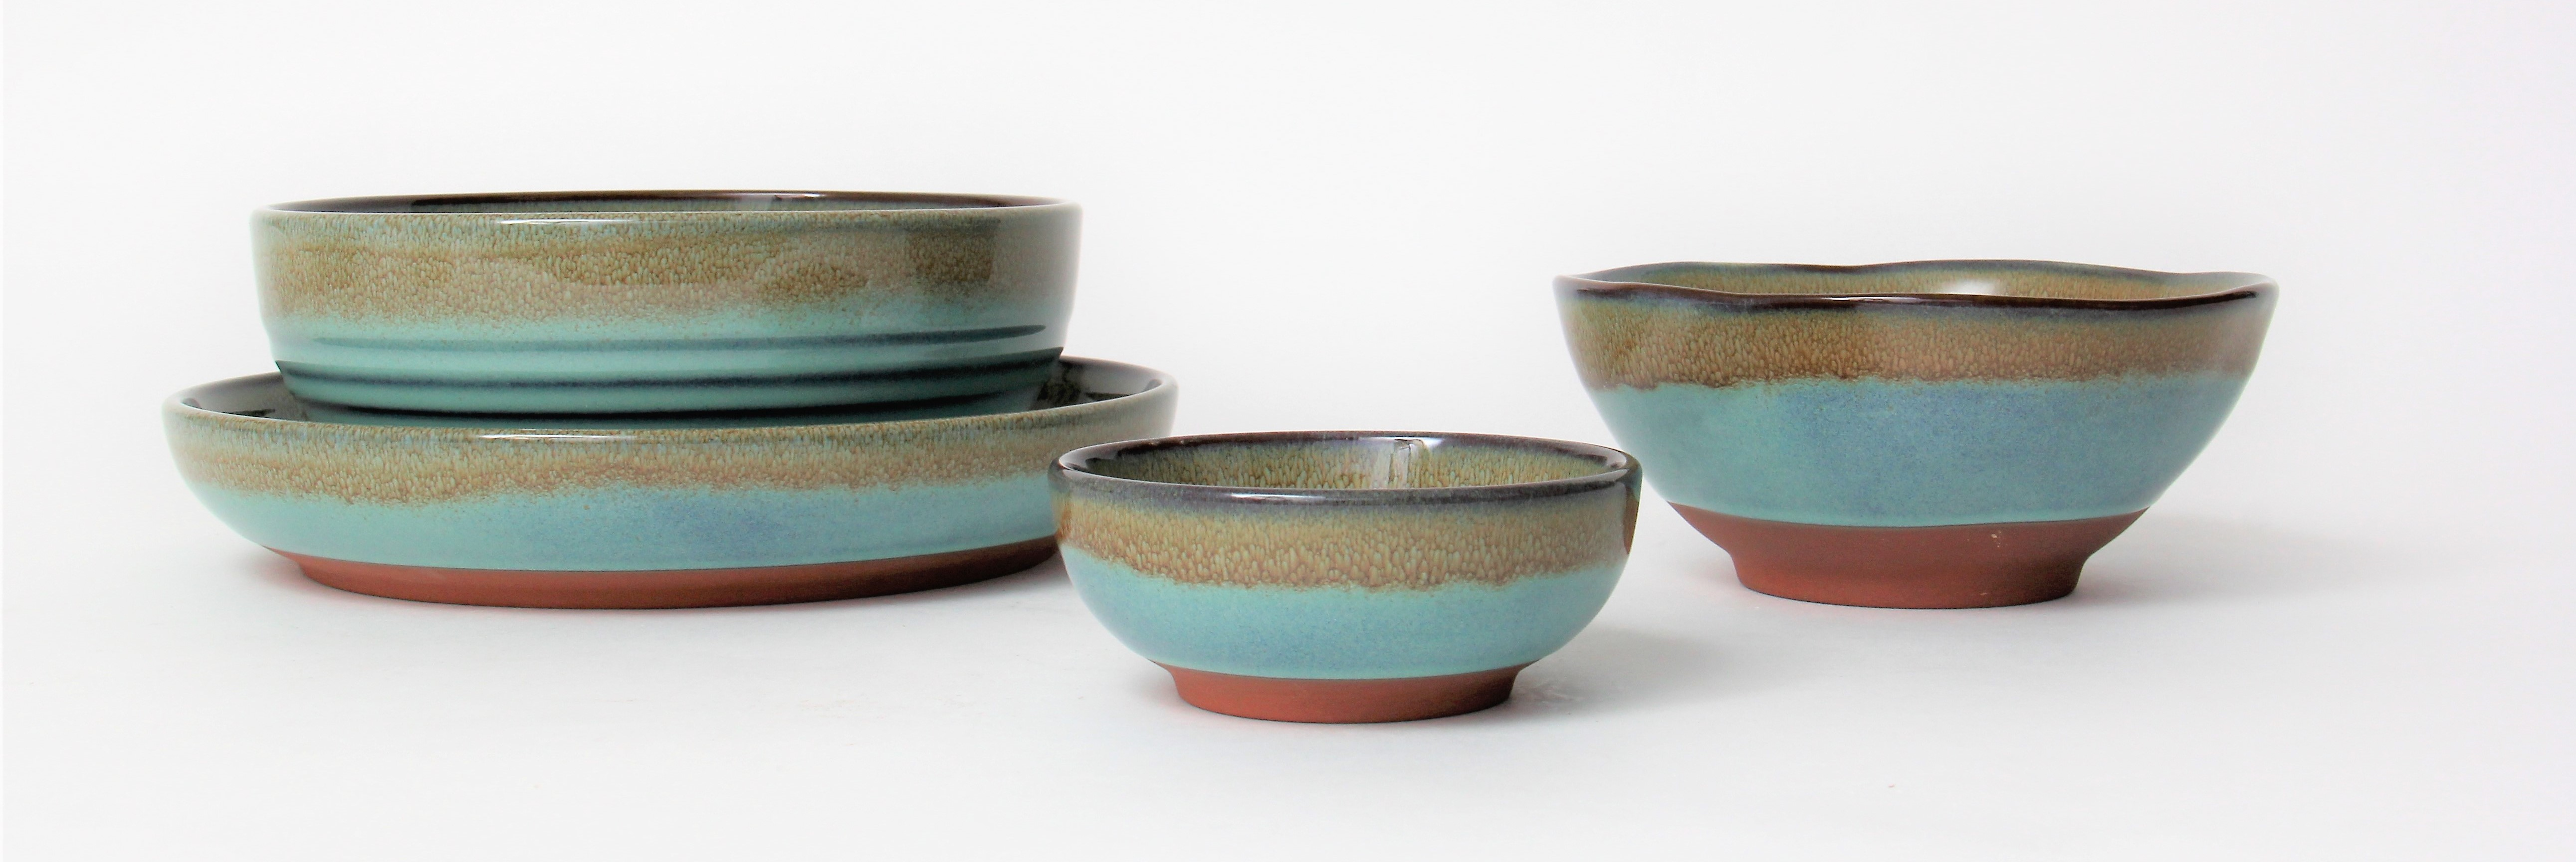 dewitt kendall ceramic bowl product development pottery terra cotta tabletimes blog